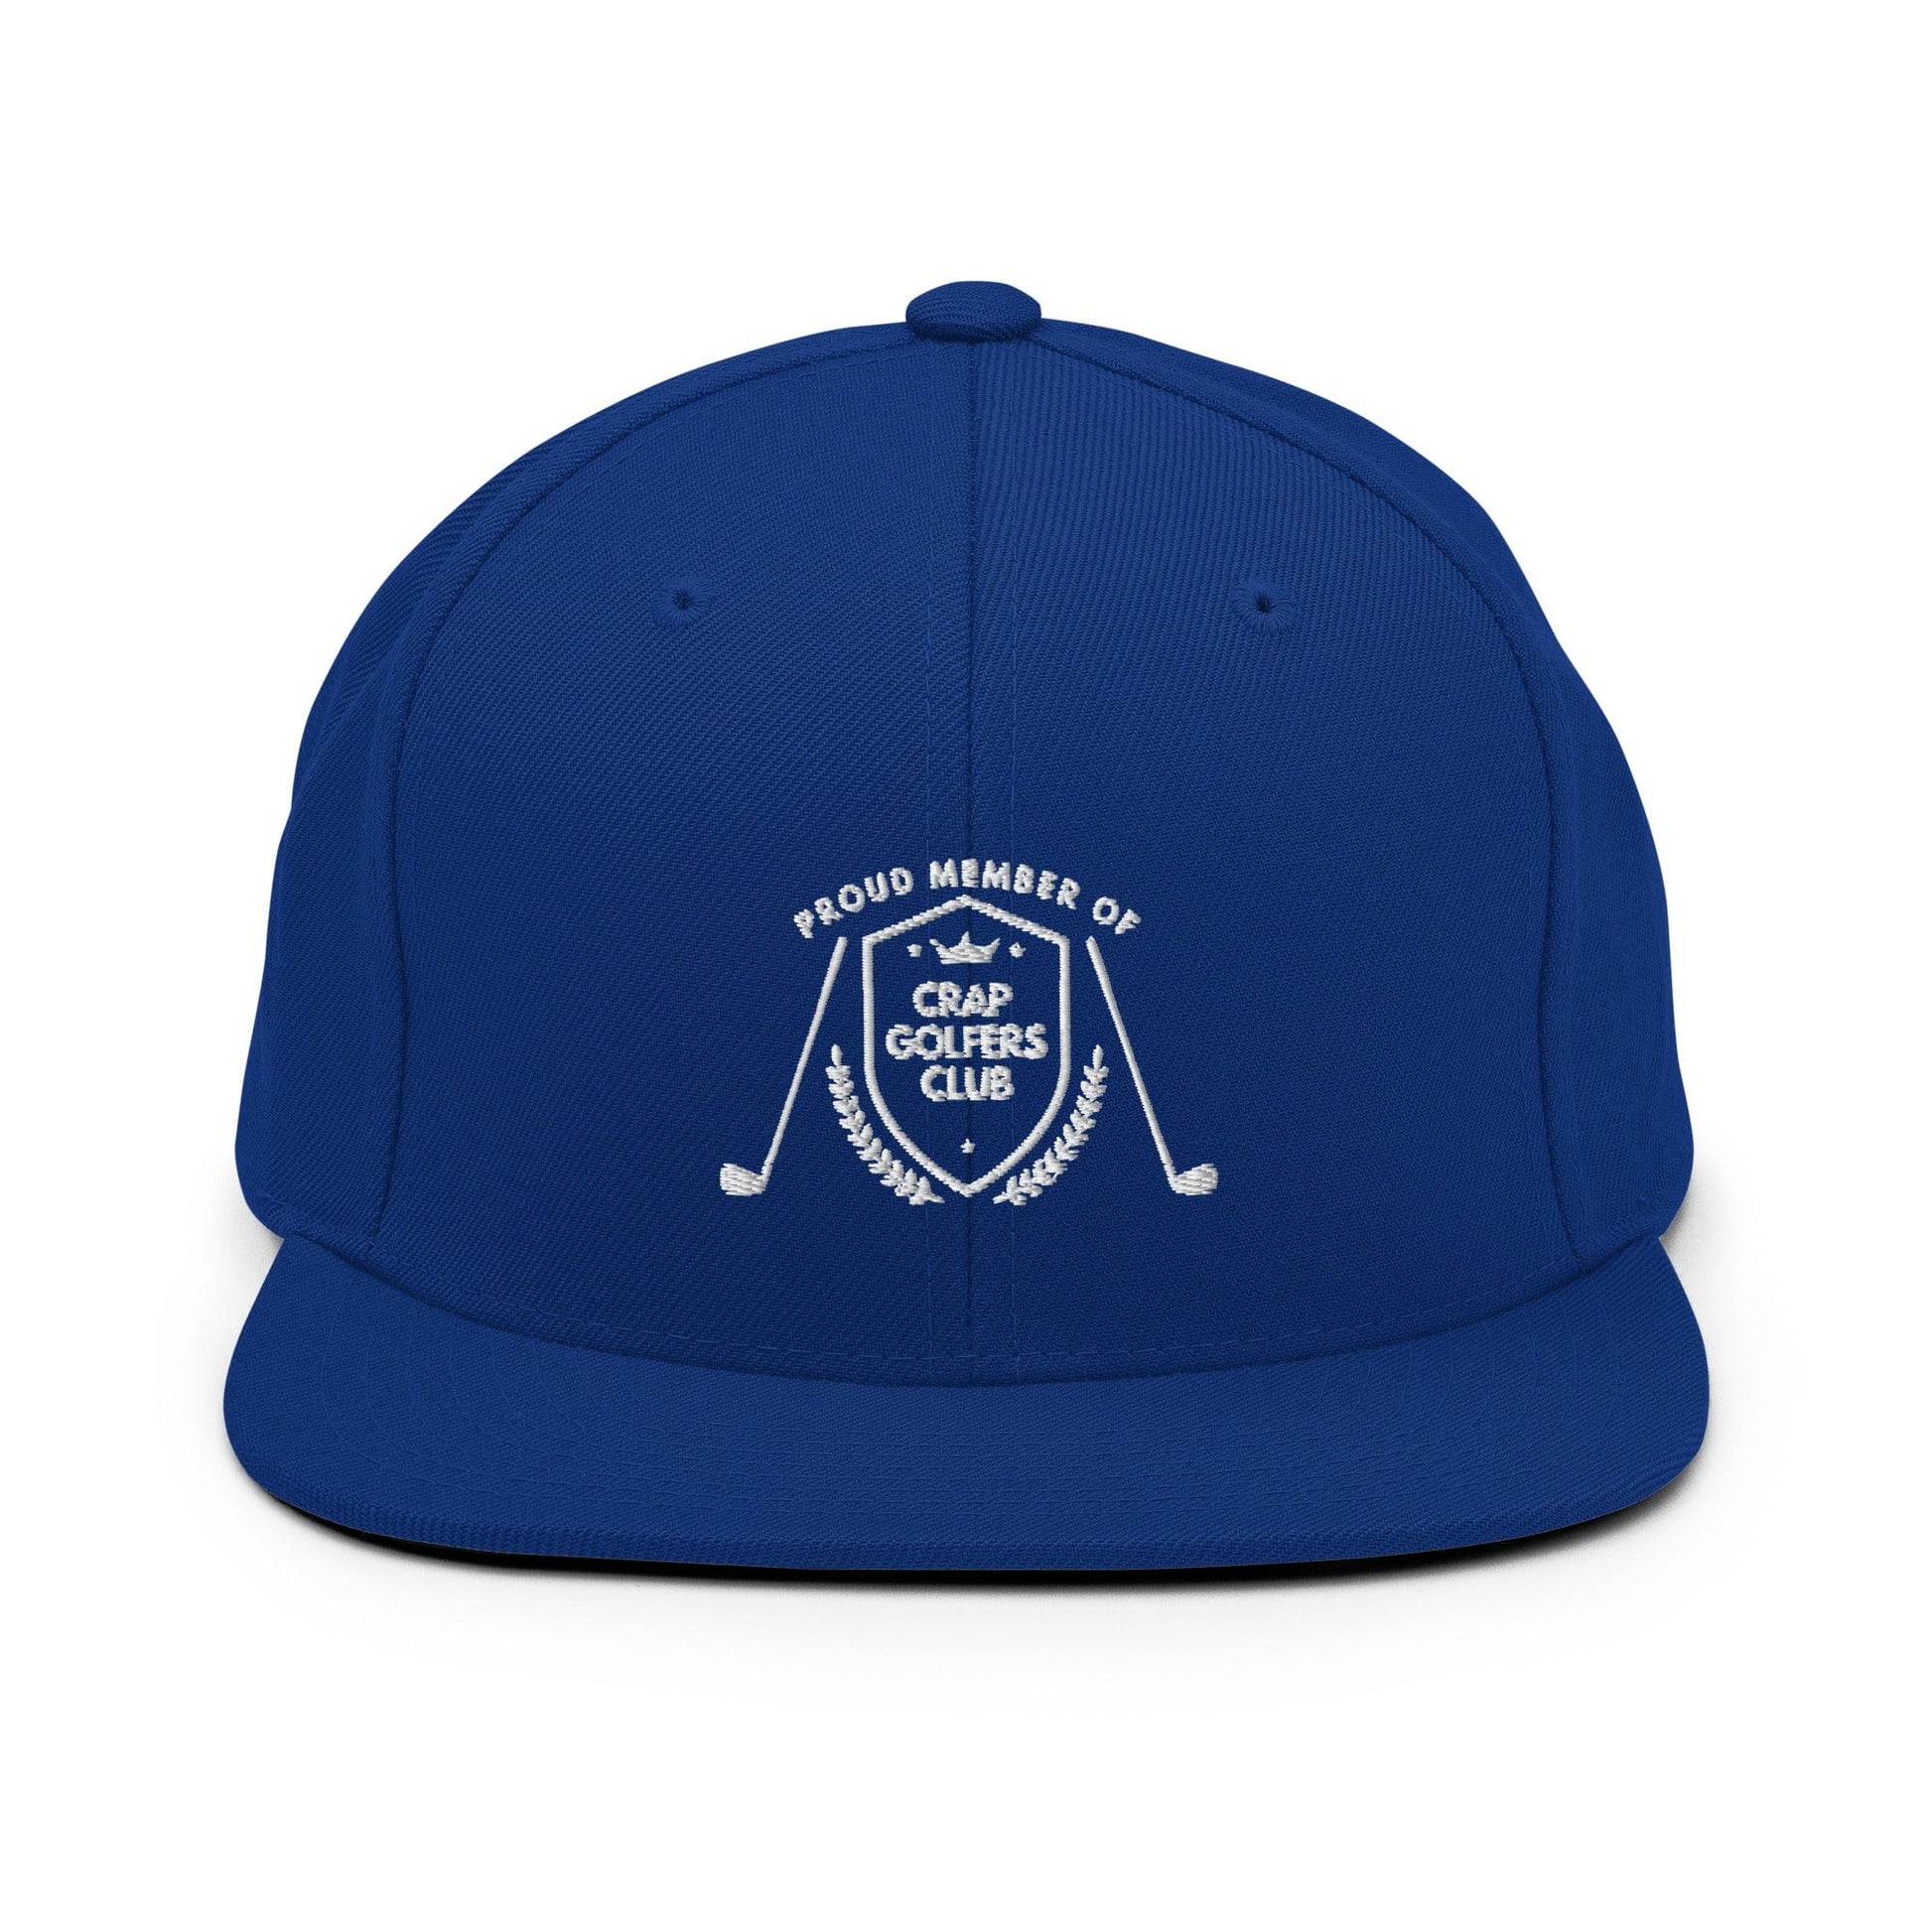 Funny Golfer Gifts  Snapback Hat Royal Blue Crap Golfers Club Snapback Hat